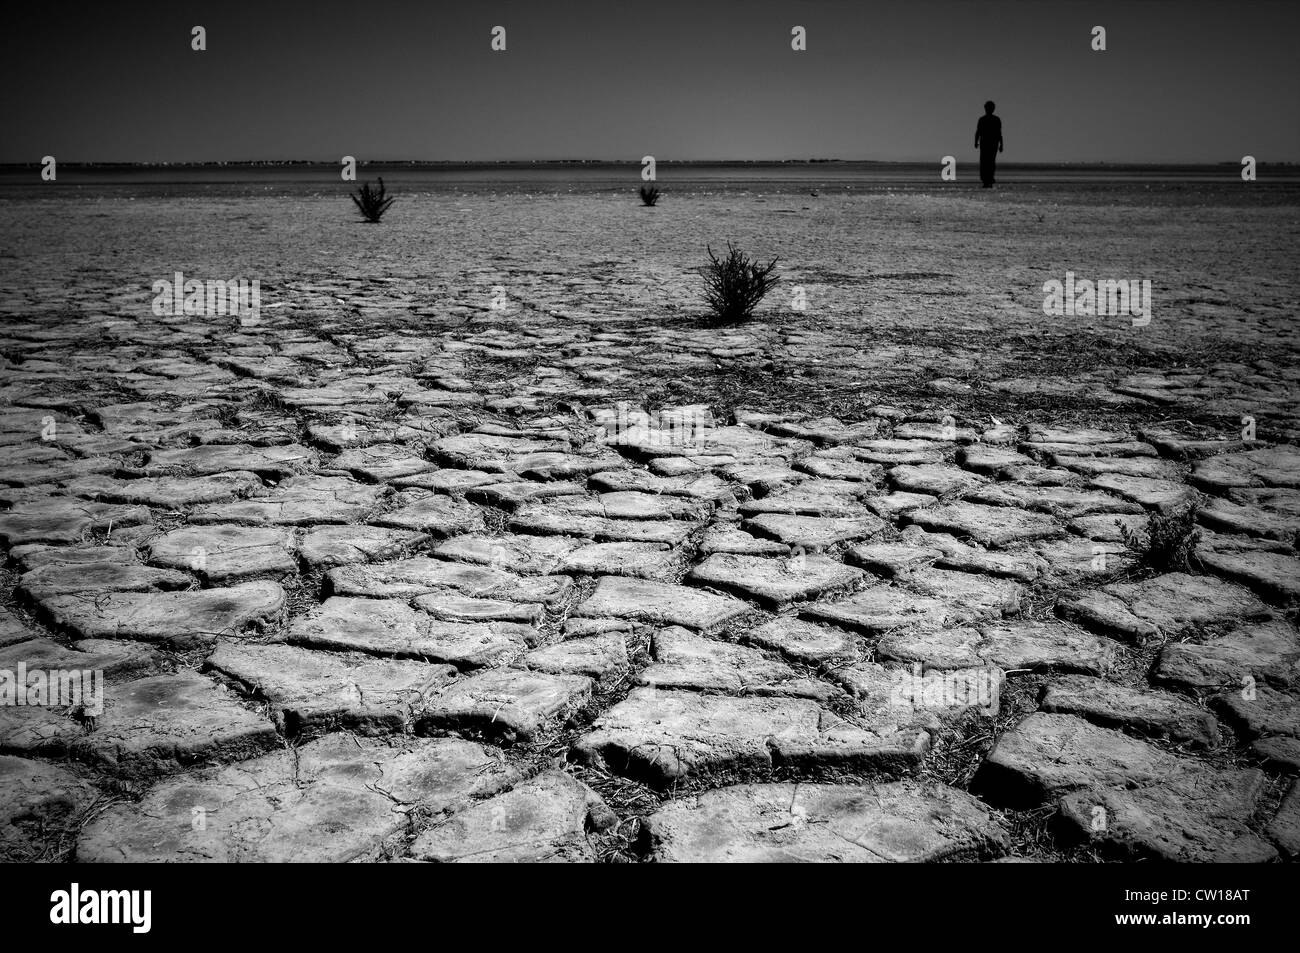 Cracked desert surface Stock Photo